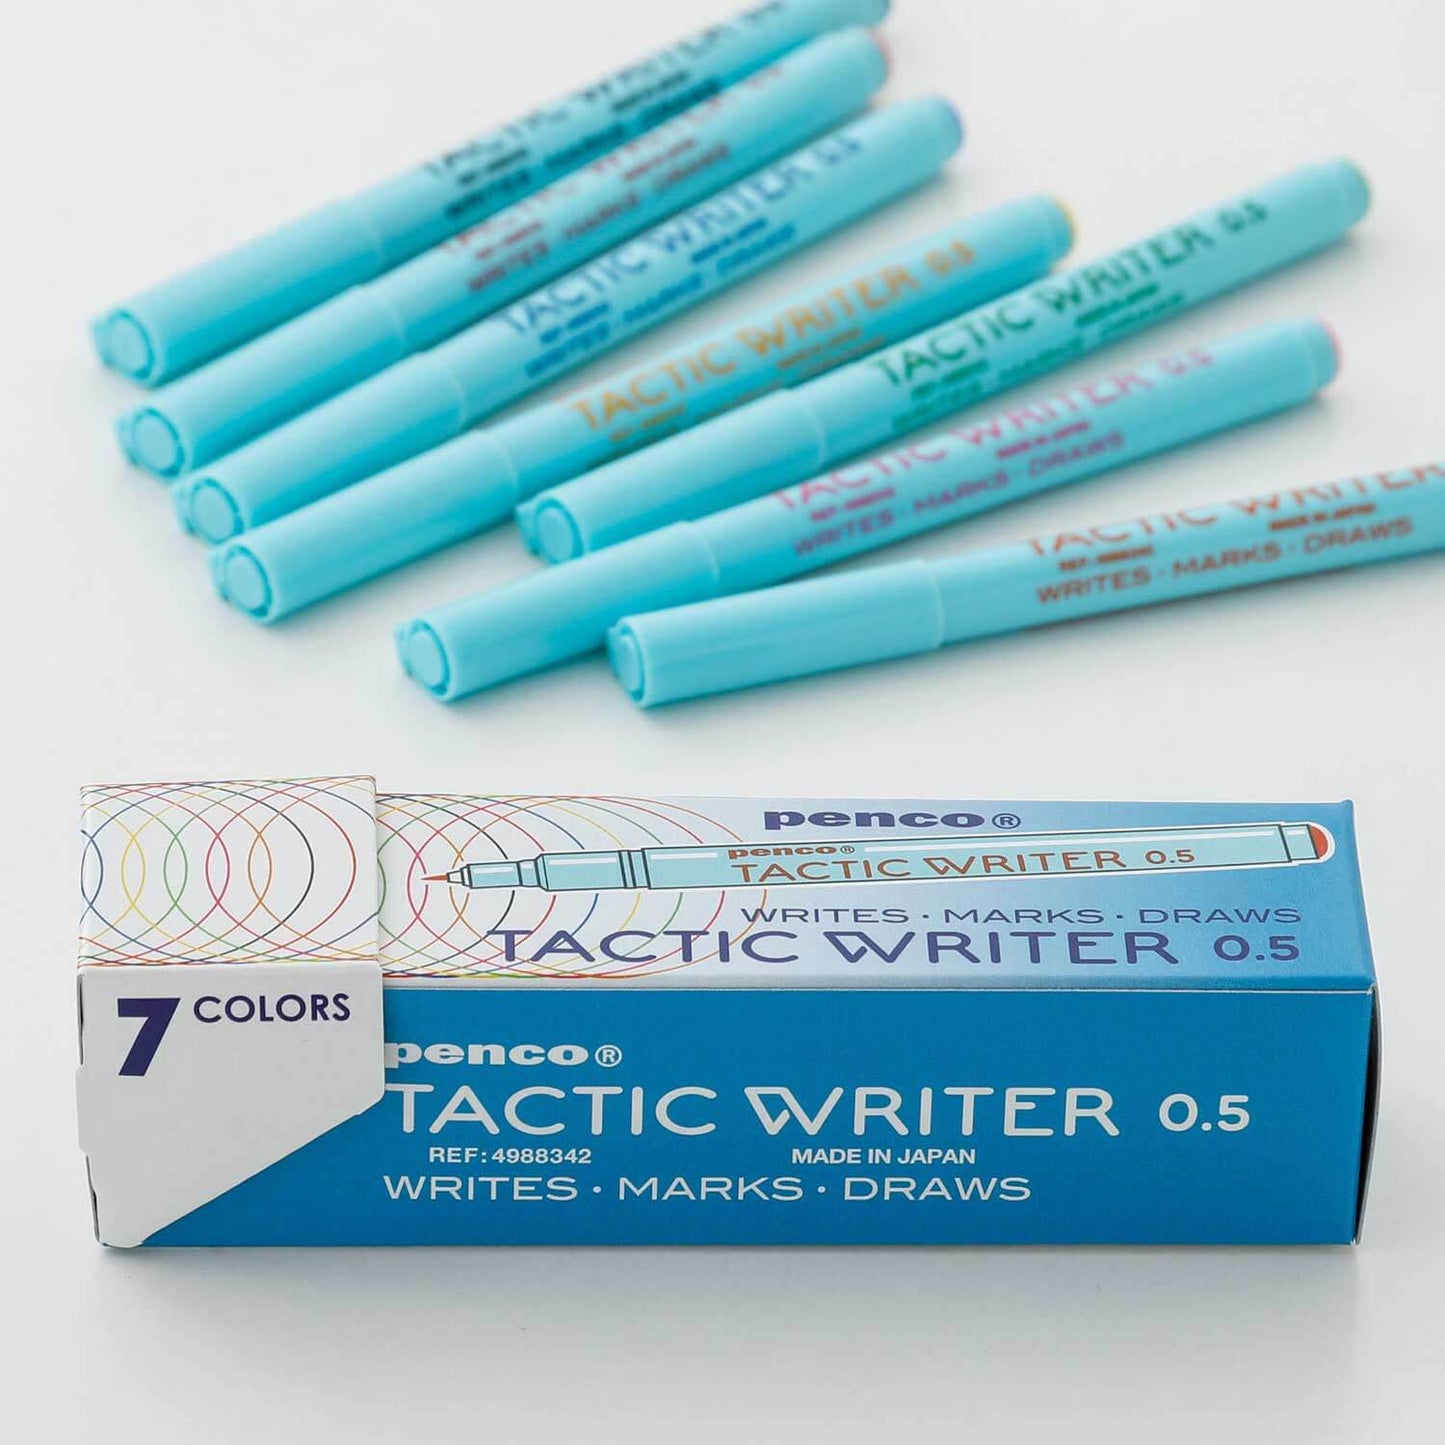 Tactic Writer Pen Set